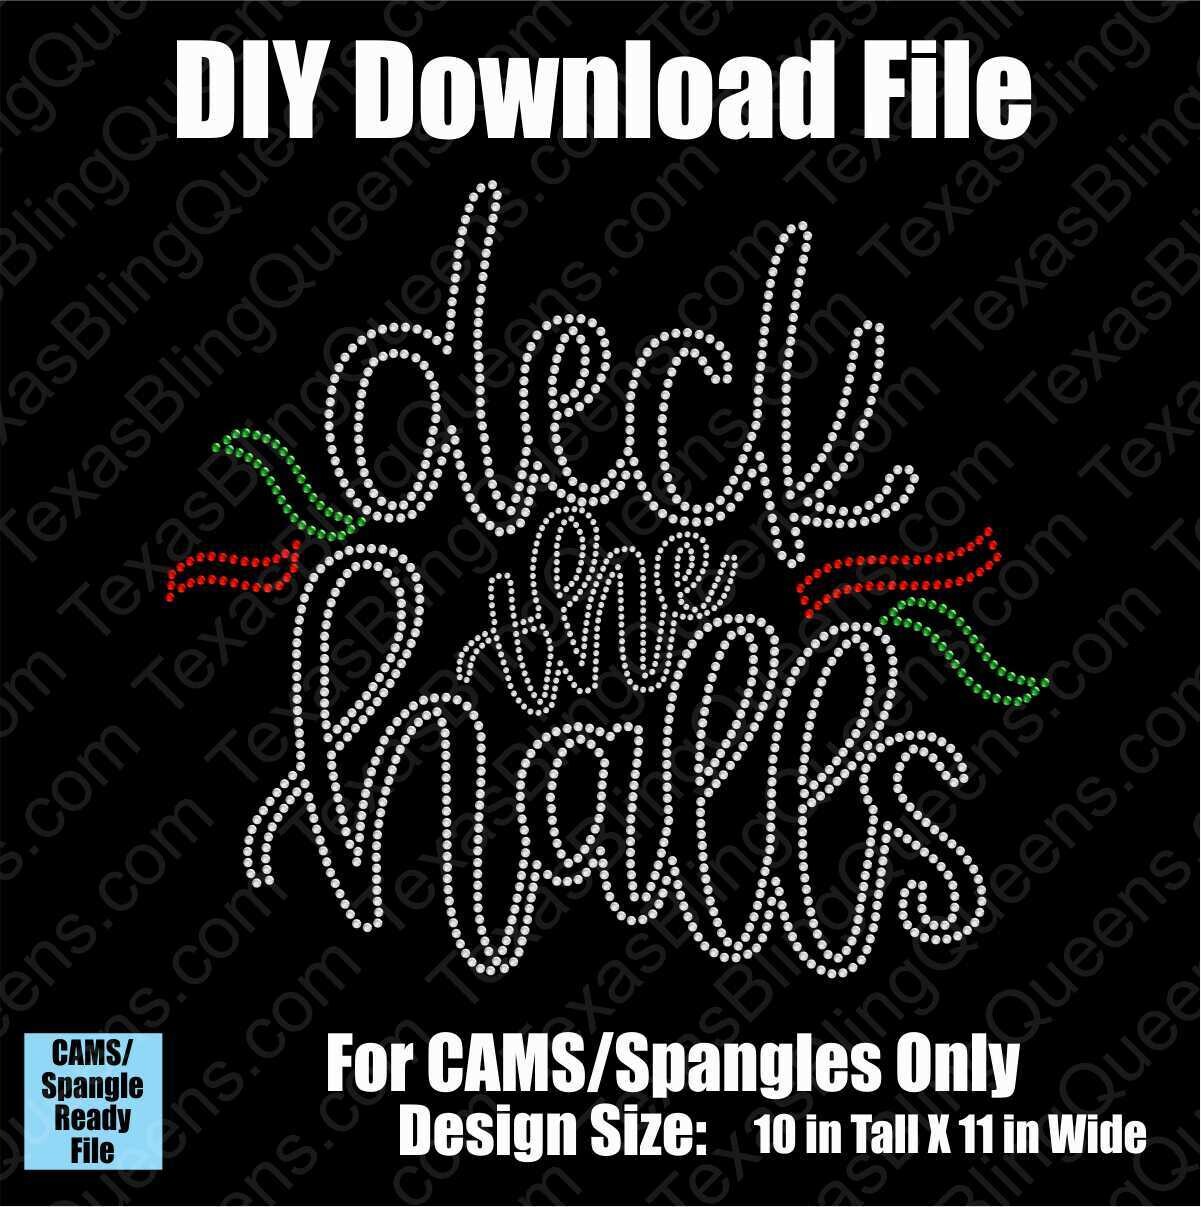 Deck the Halls Christmas Download File - CAMS/ProSpangle